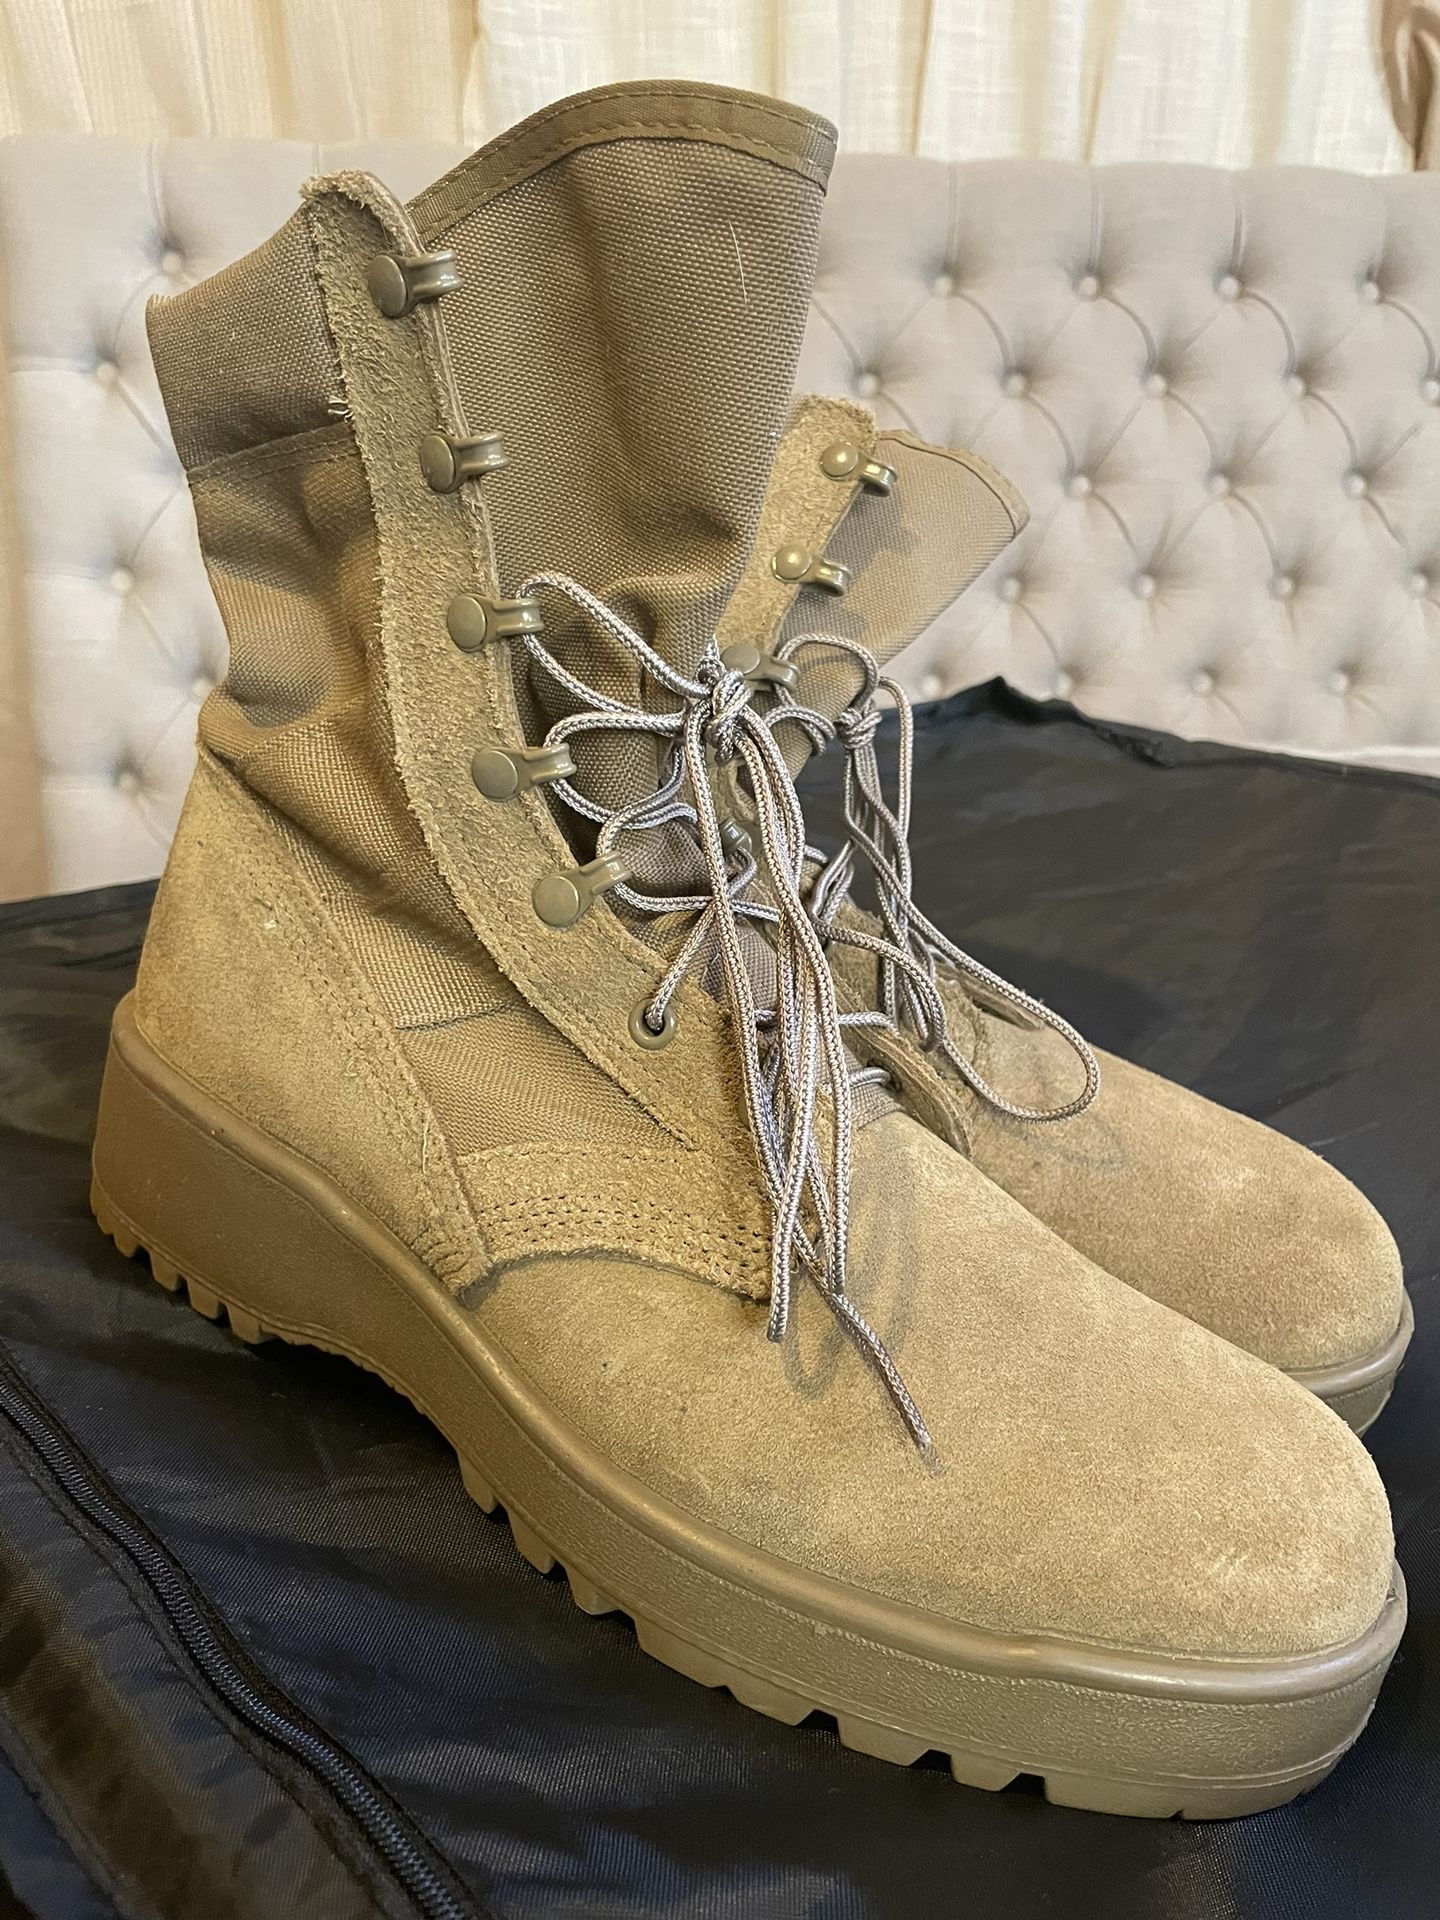 Authentic Combat Boots 